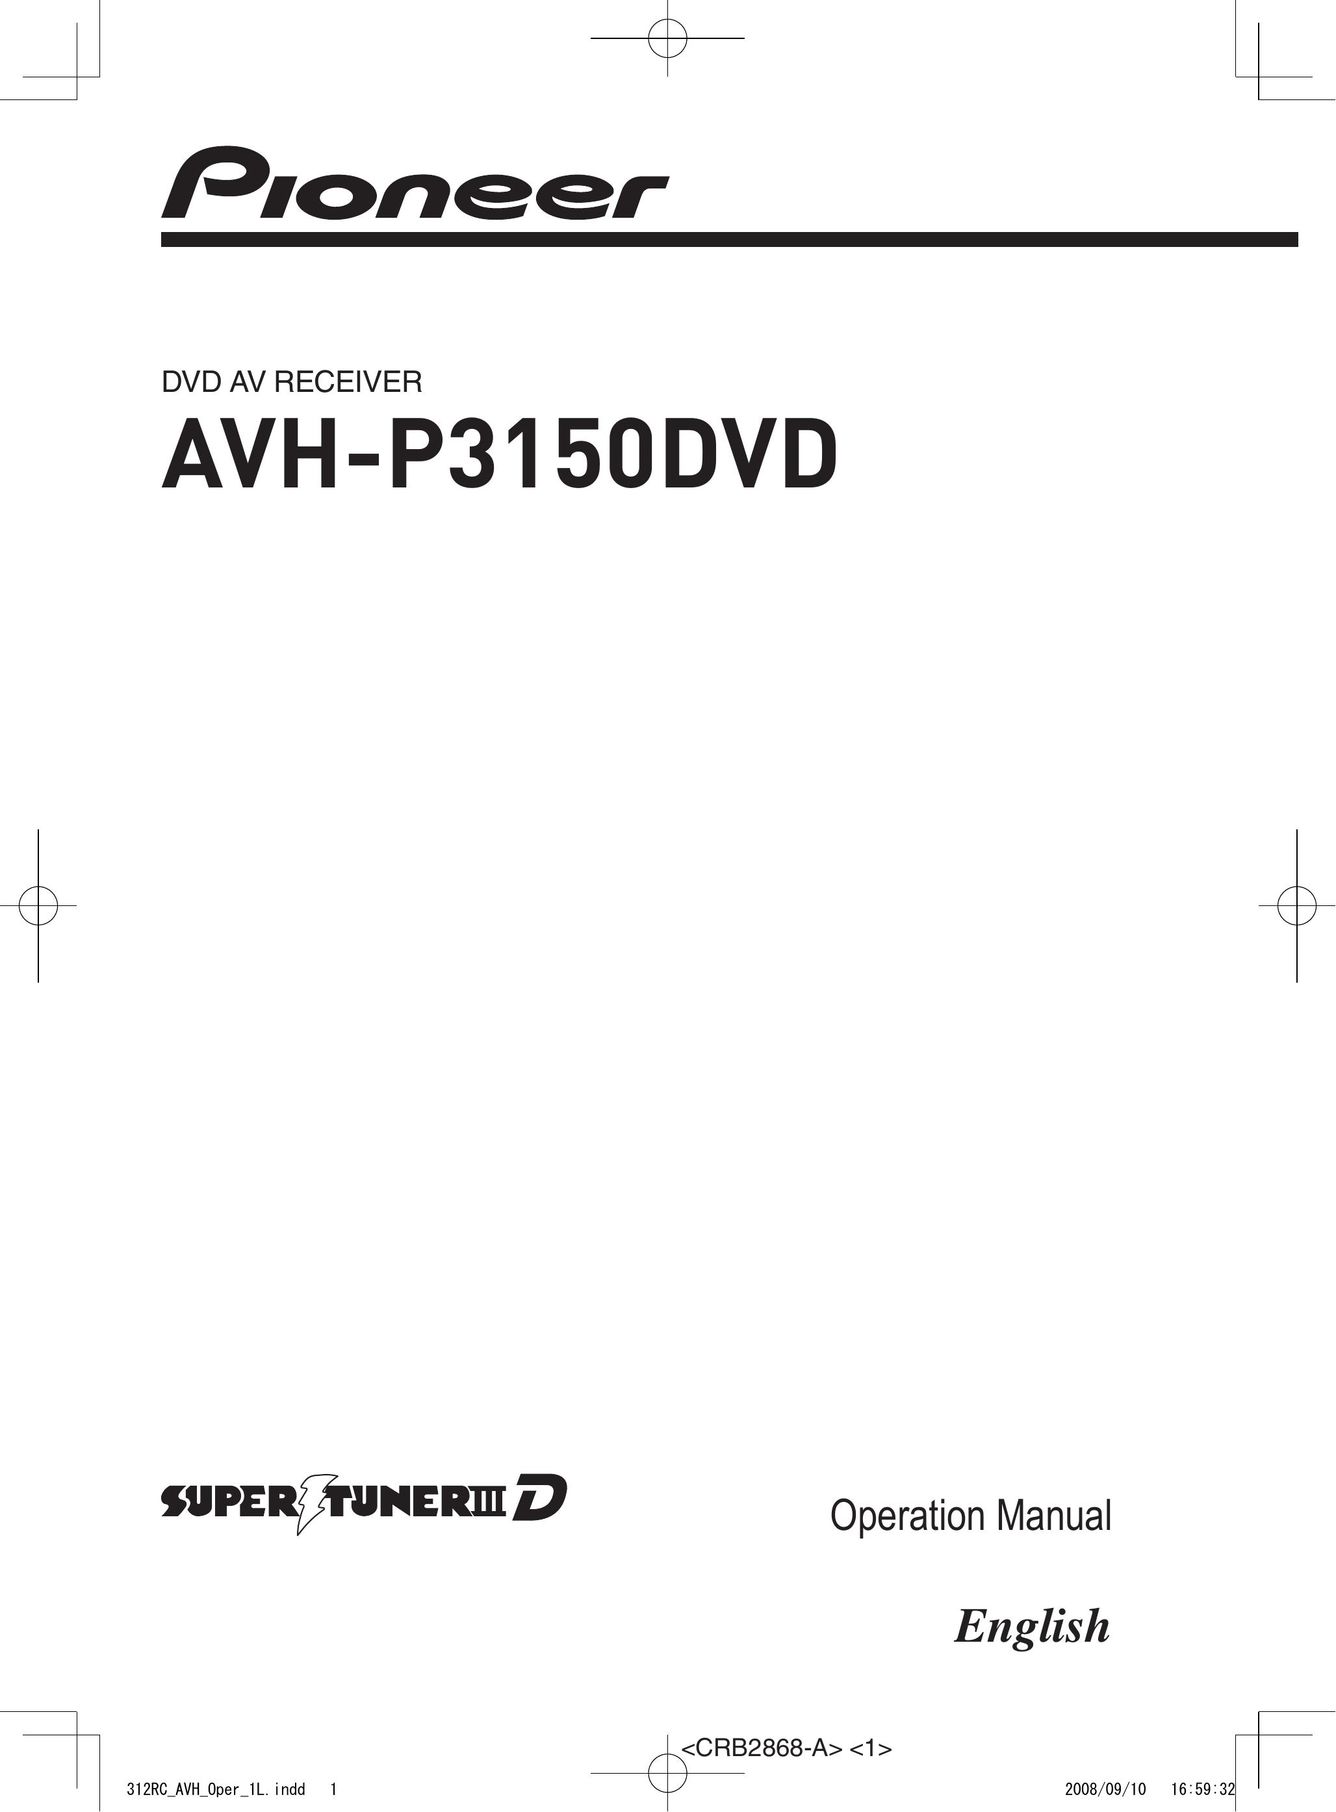 Pioneer AVH-P3150DVD Car Video System User Manual